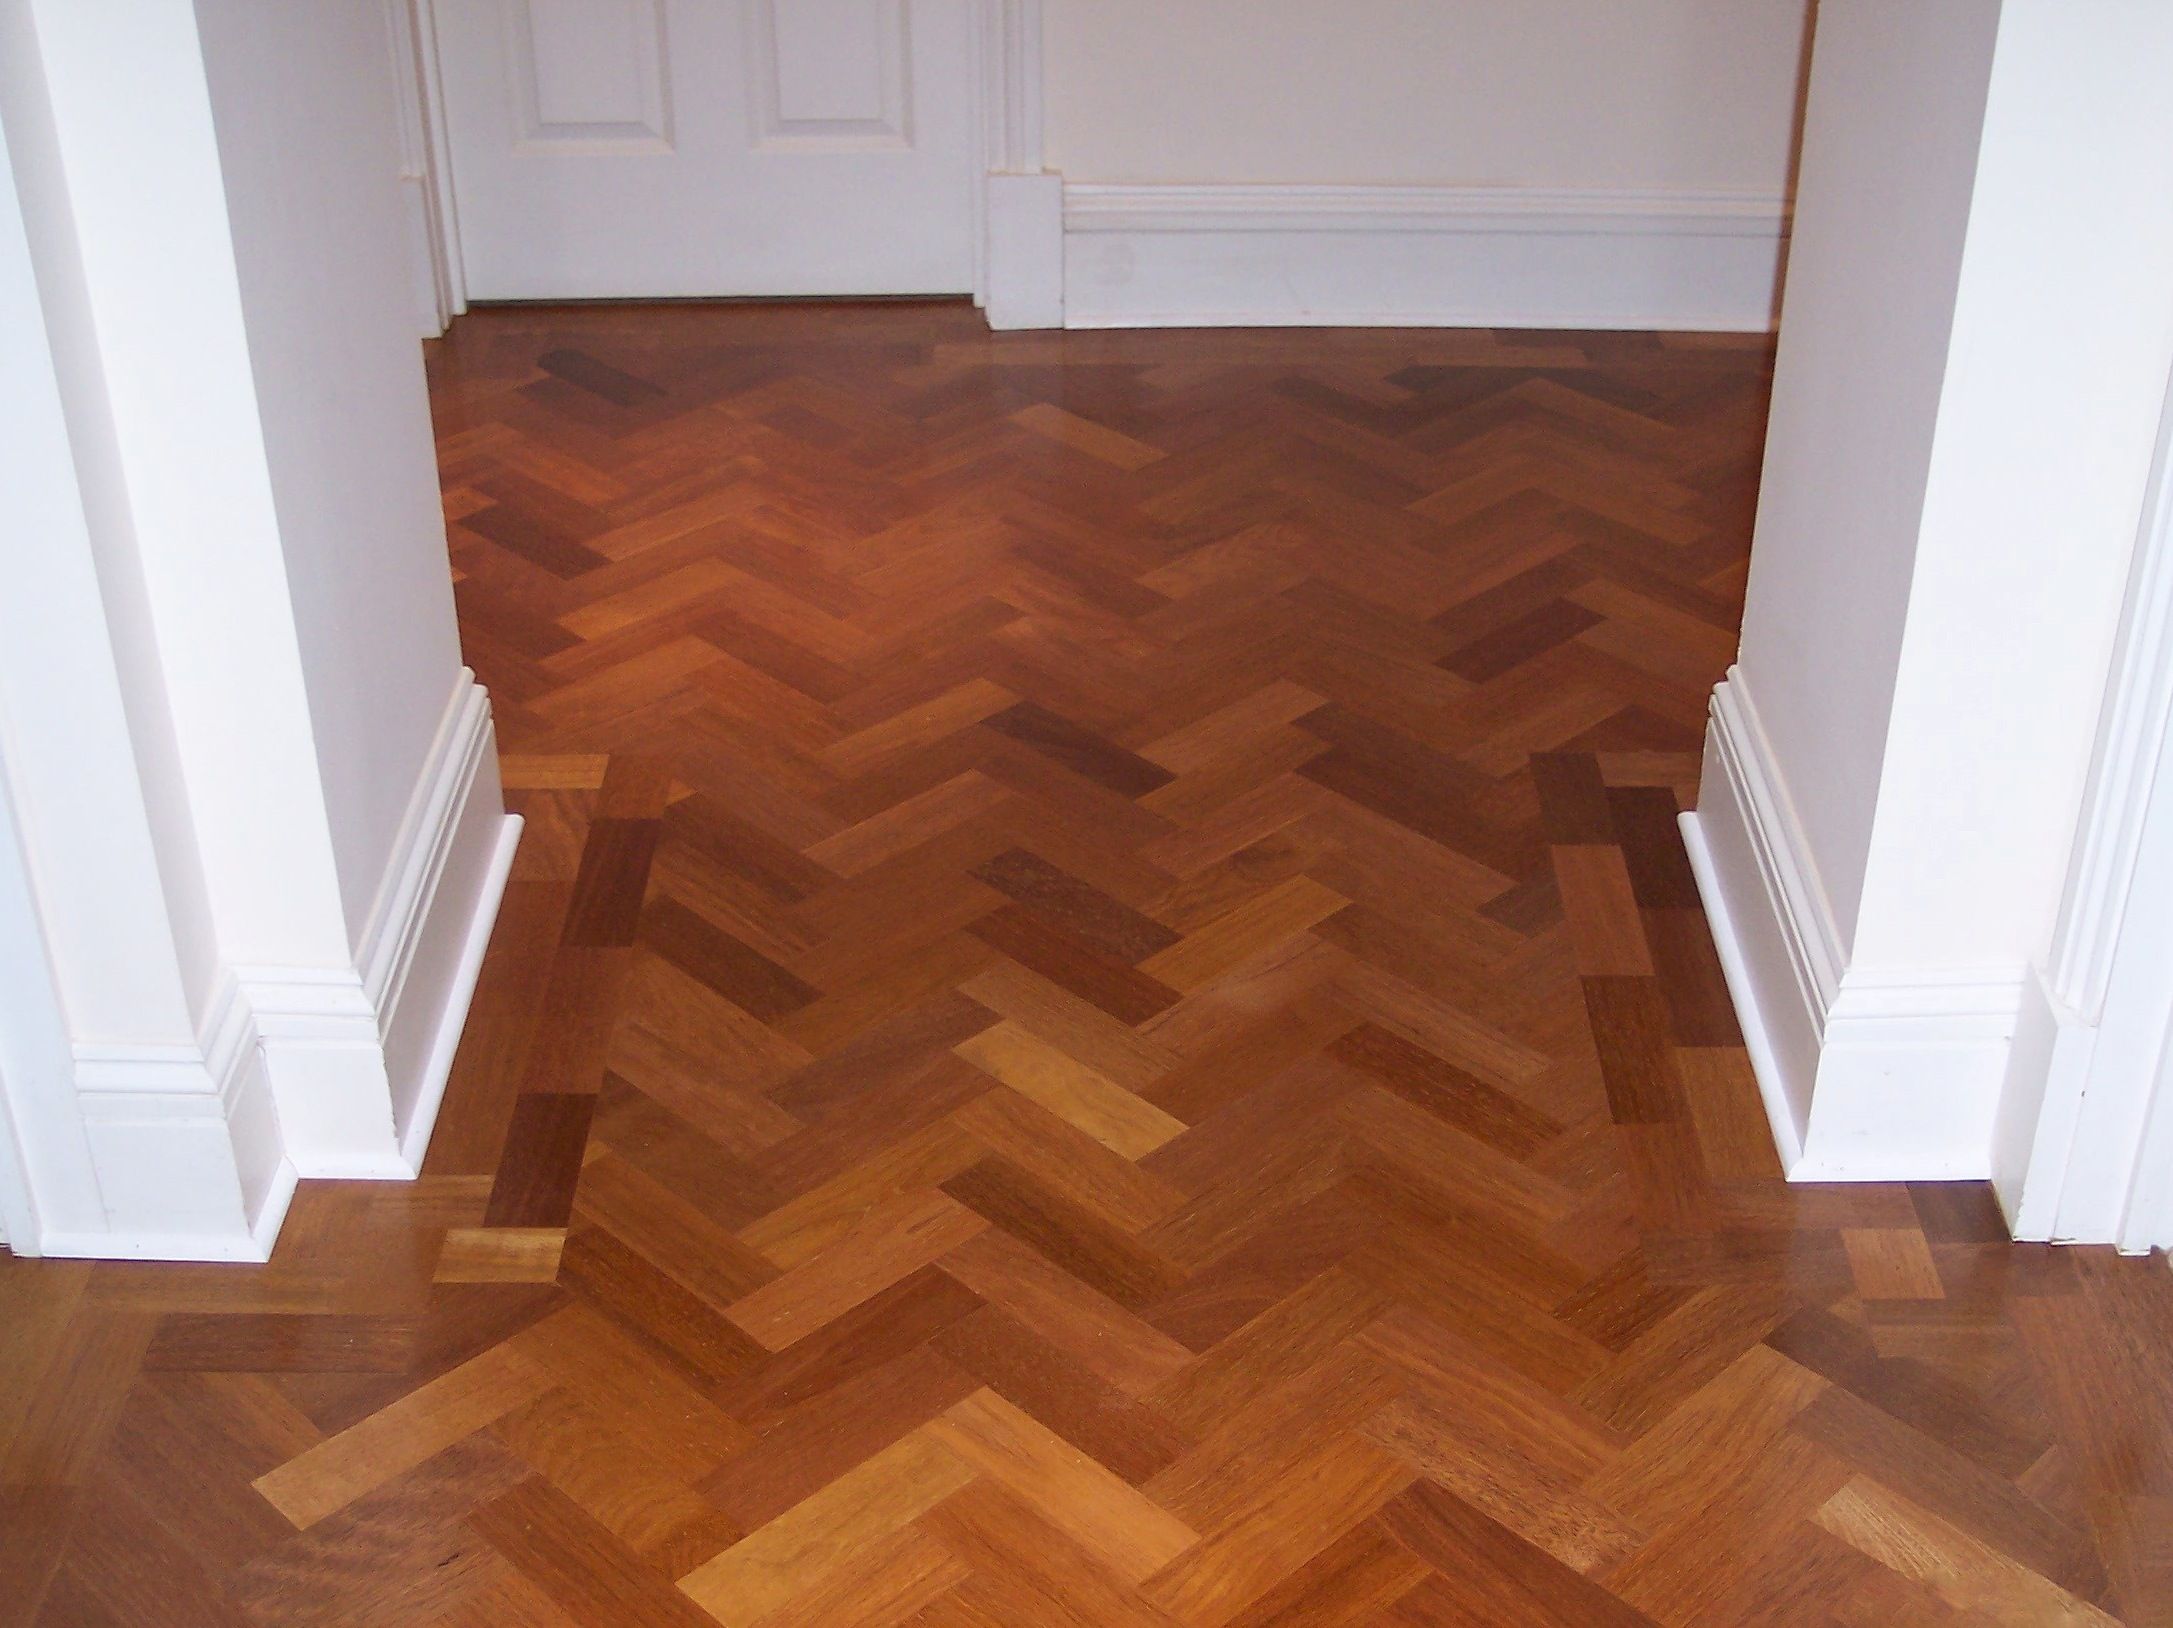 Merbau Hardwood Floor, LVL Timber Products, Composite Timber Decking